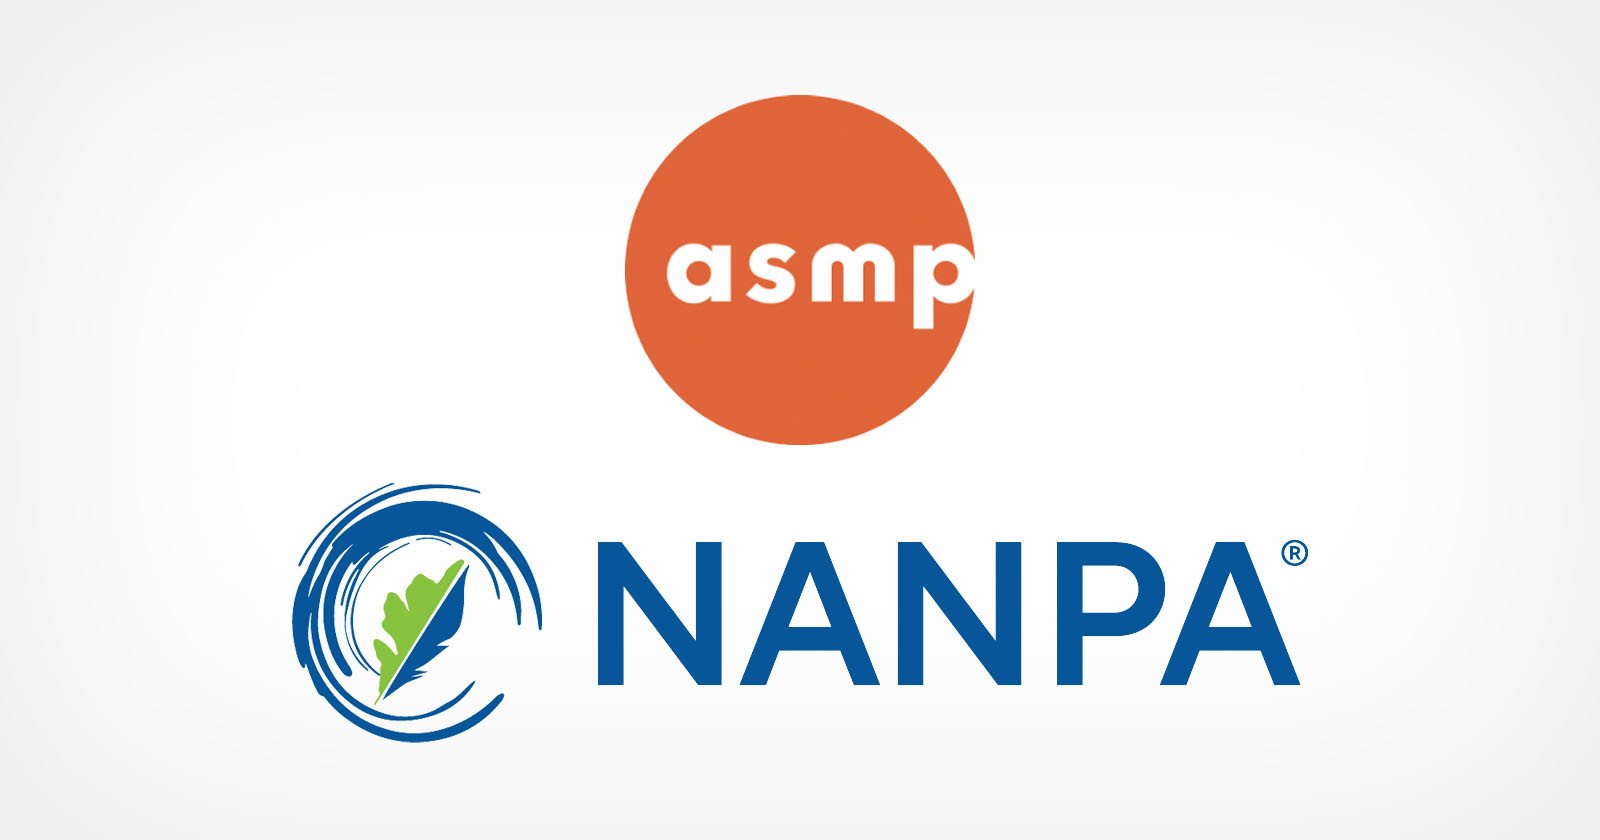  asmp nanpa combine into photography association 